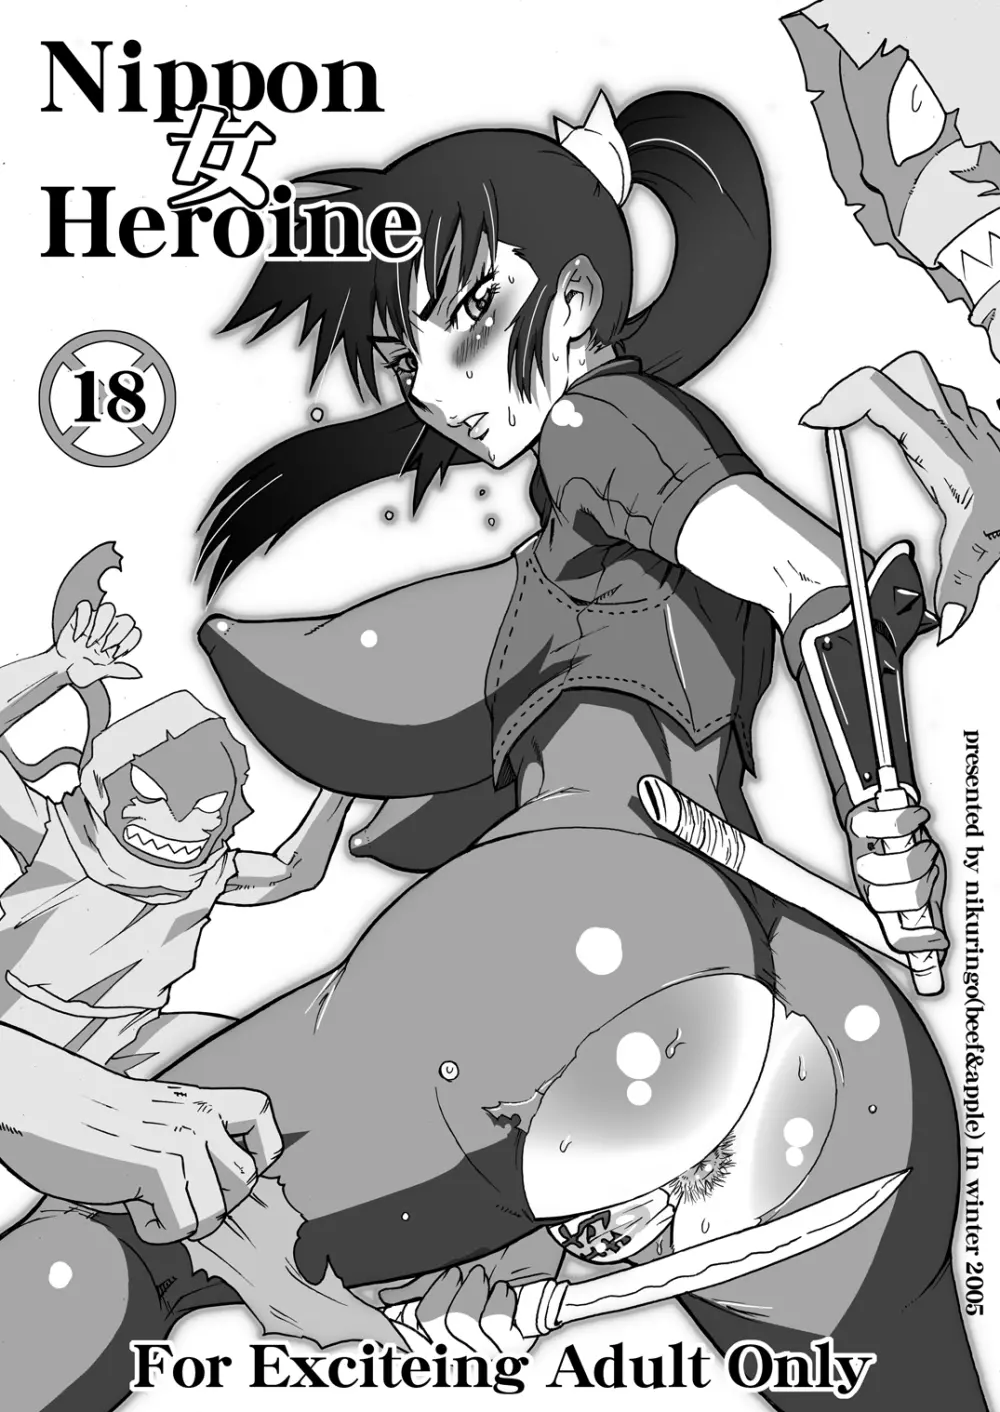 Nippon 女 Heroine - page1